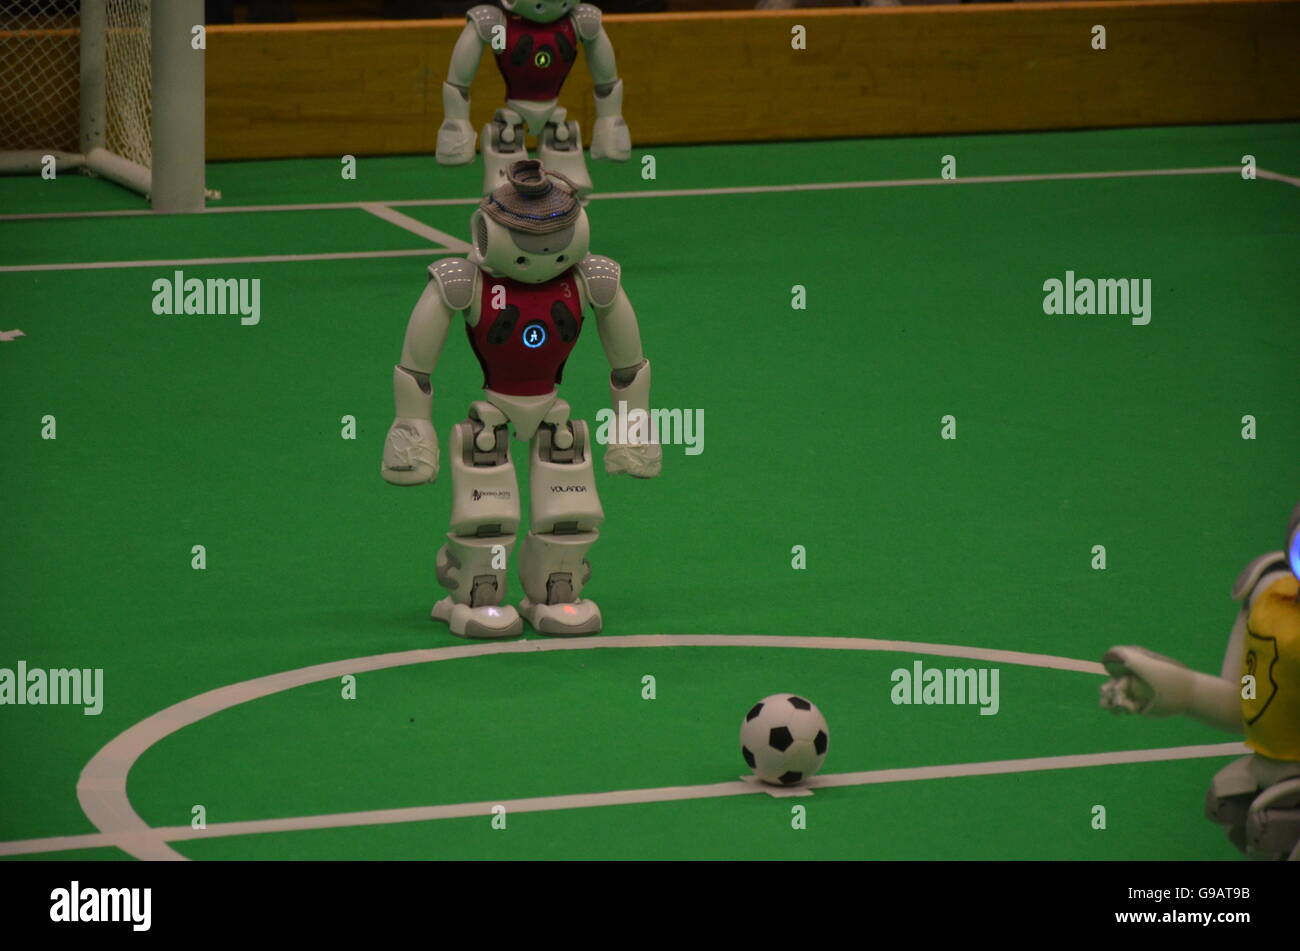 La robótica, el robot humanoide, fútbol, robocup, juego, Wired, mecánica, tecnología, Aldebarán, fútbol, goaltender artificial Foto de stock